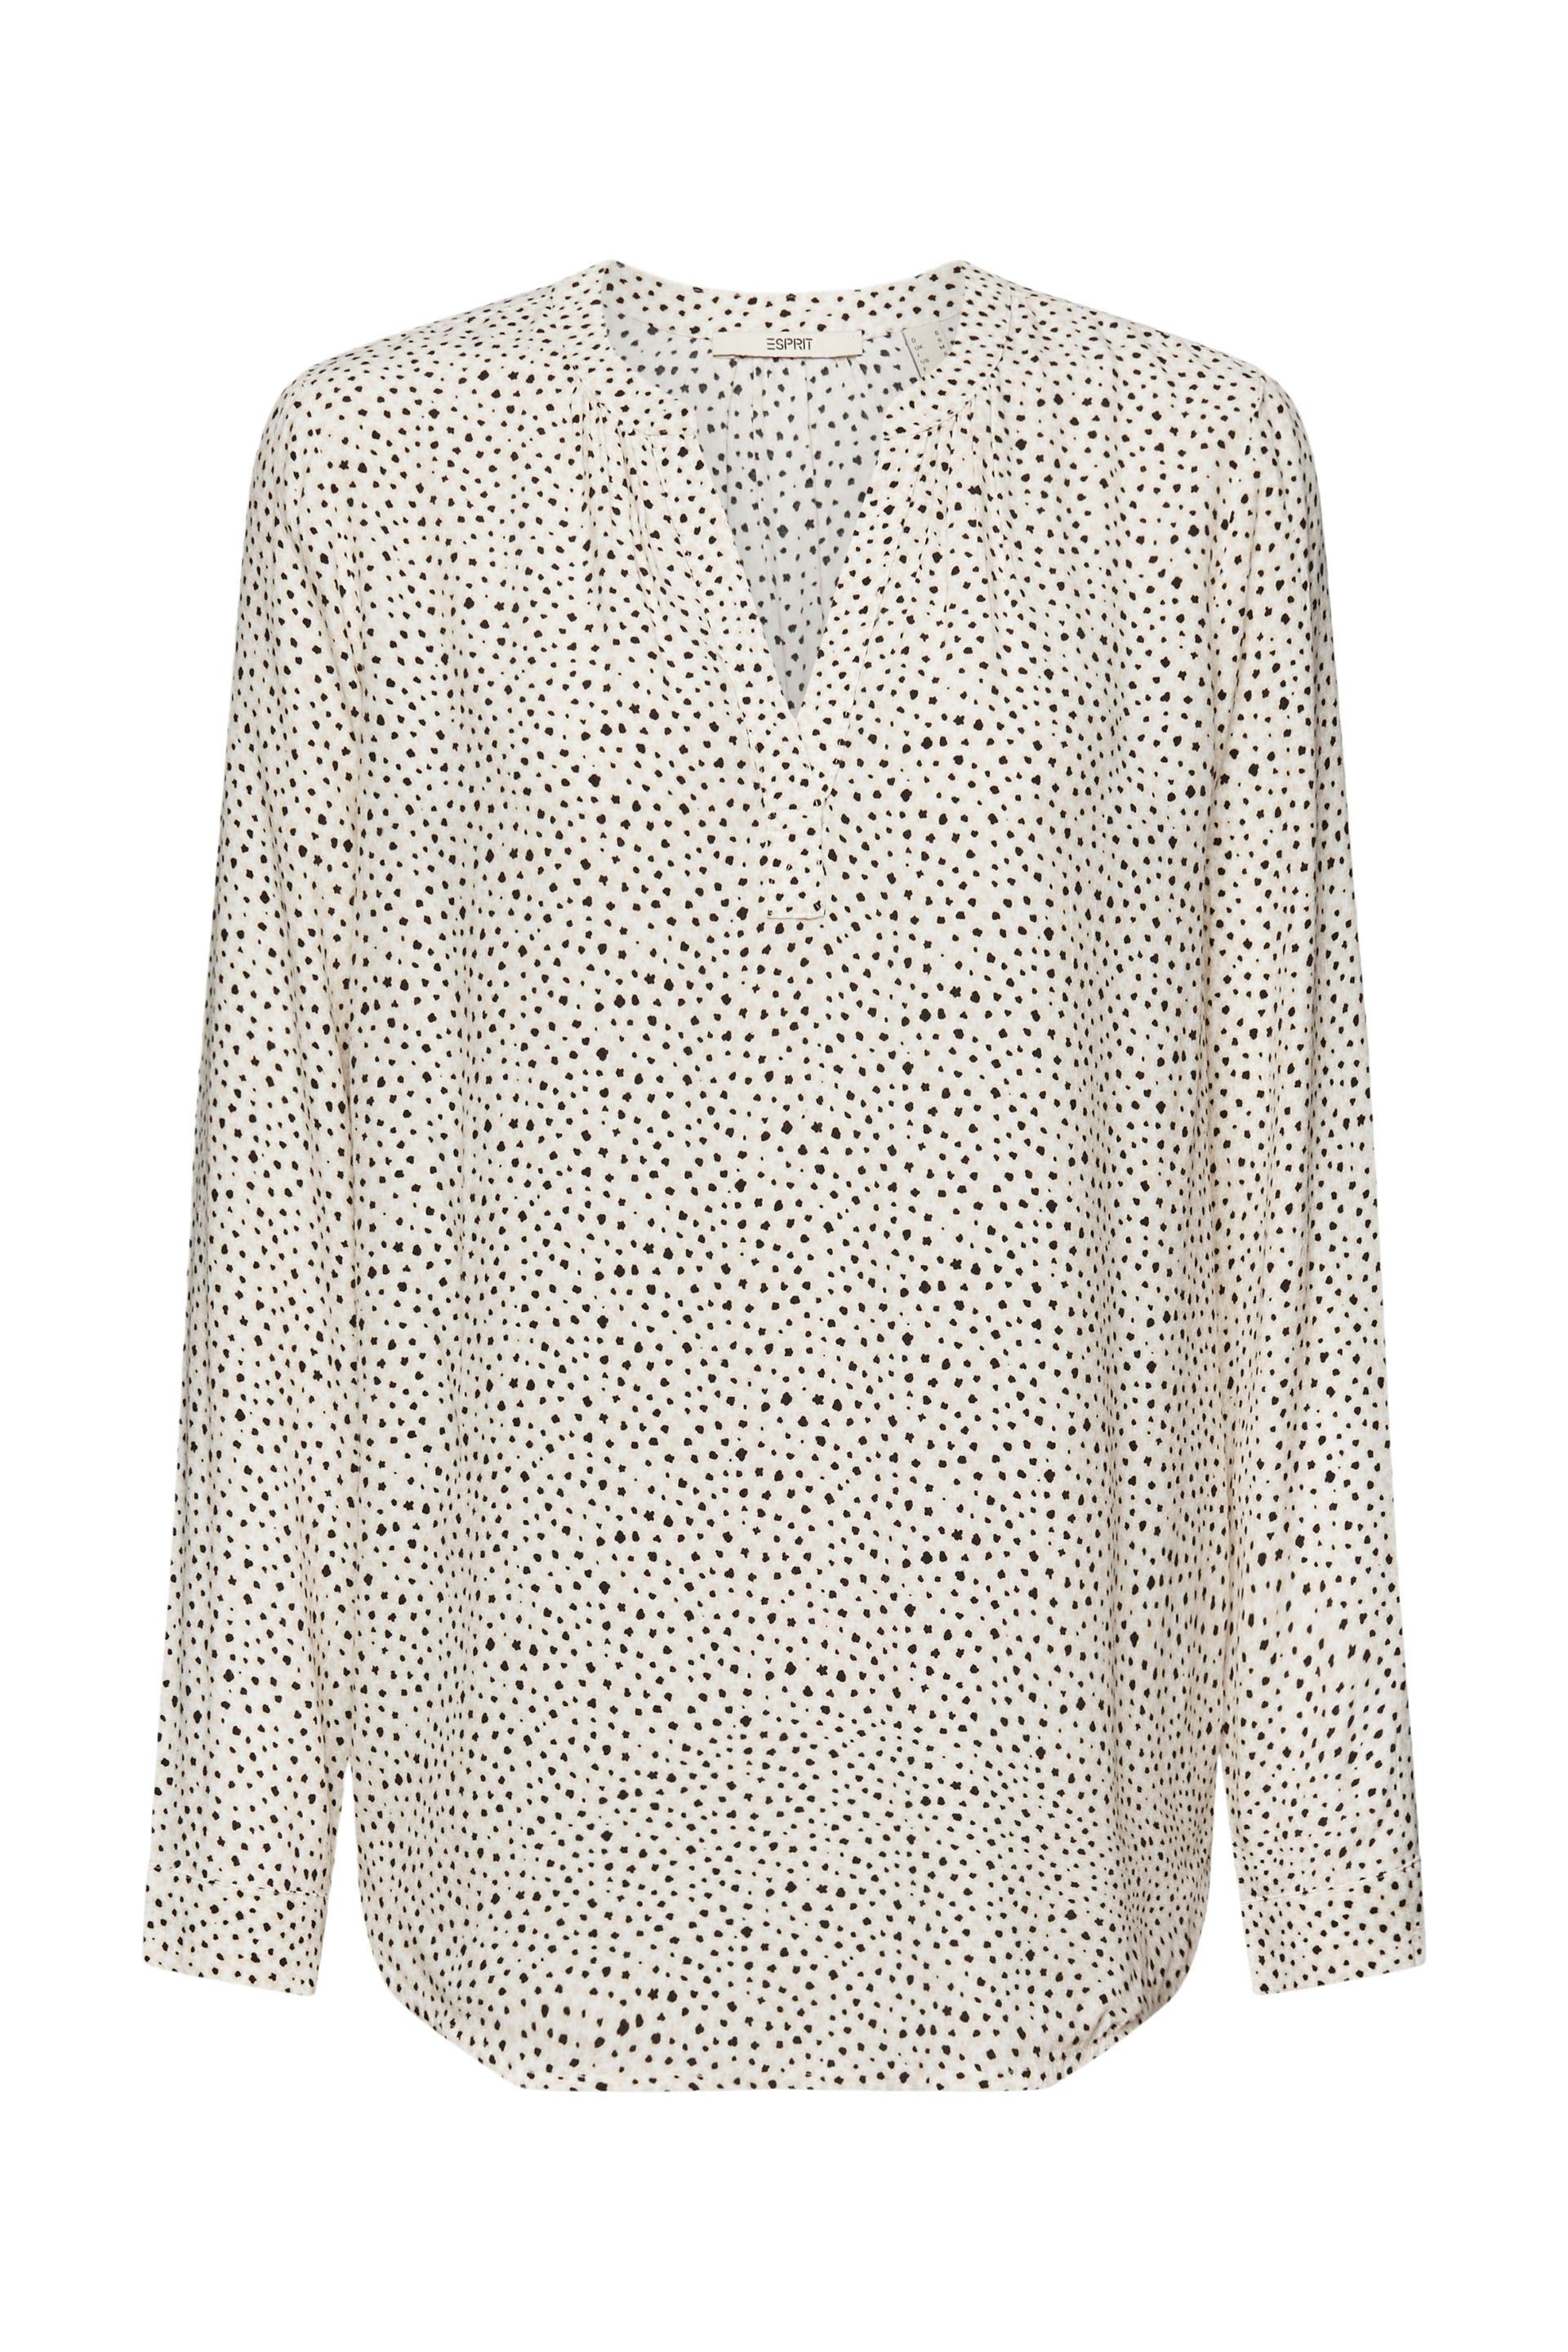 Esprit - Patterned blouse, White, large image number 0